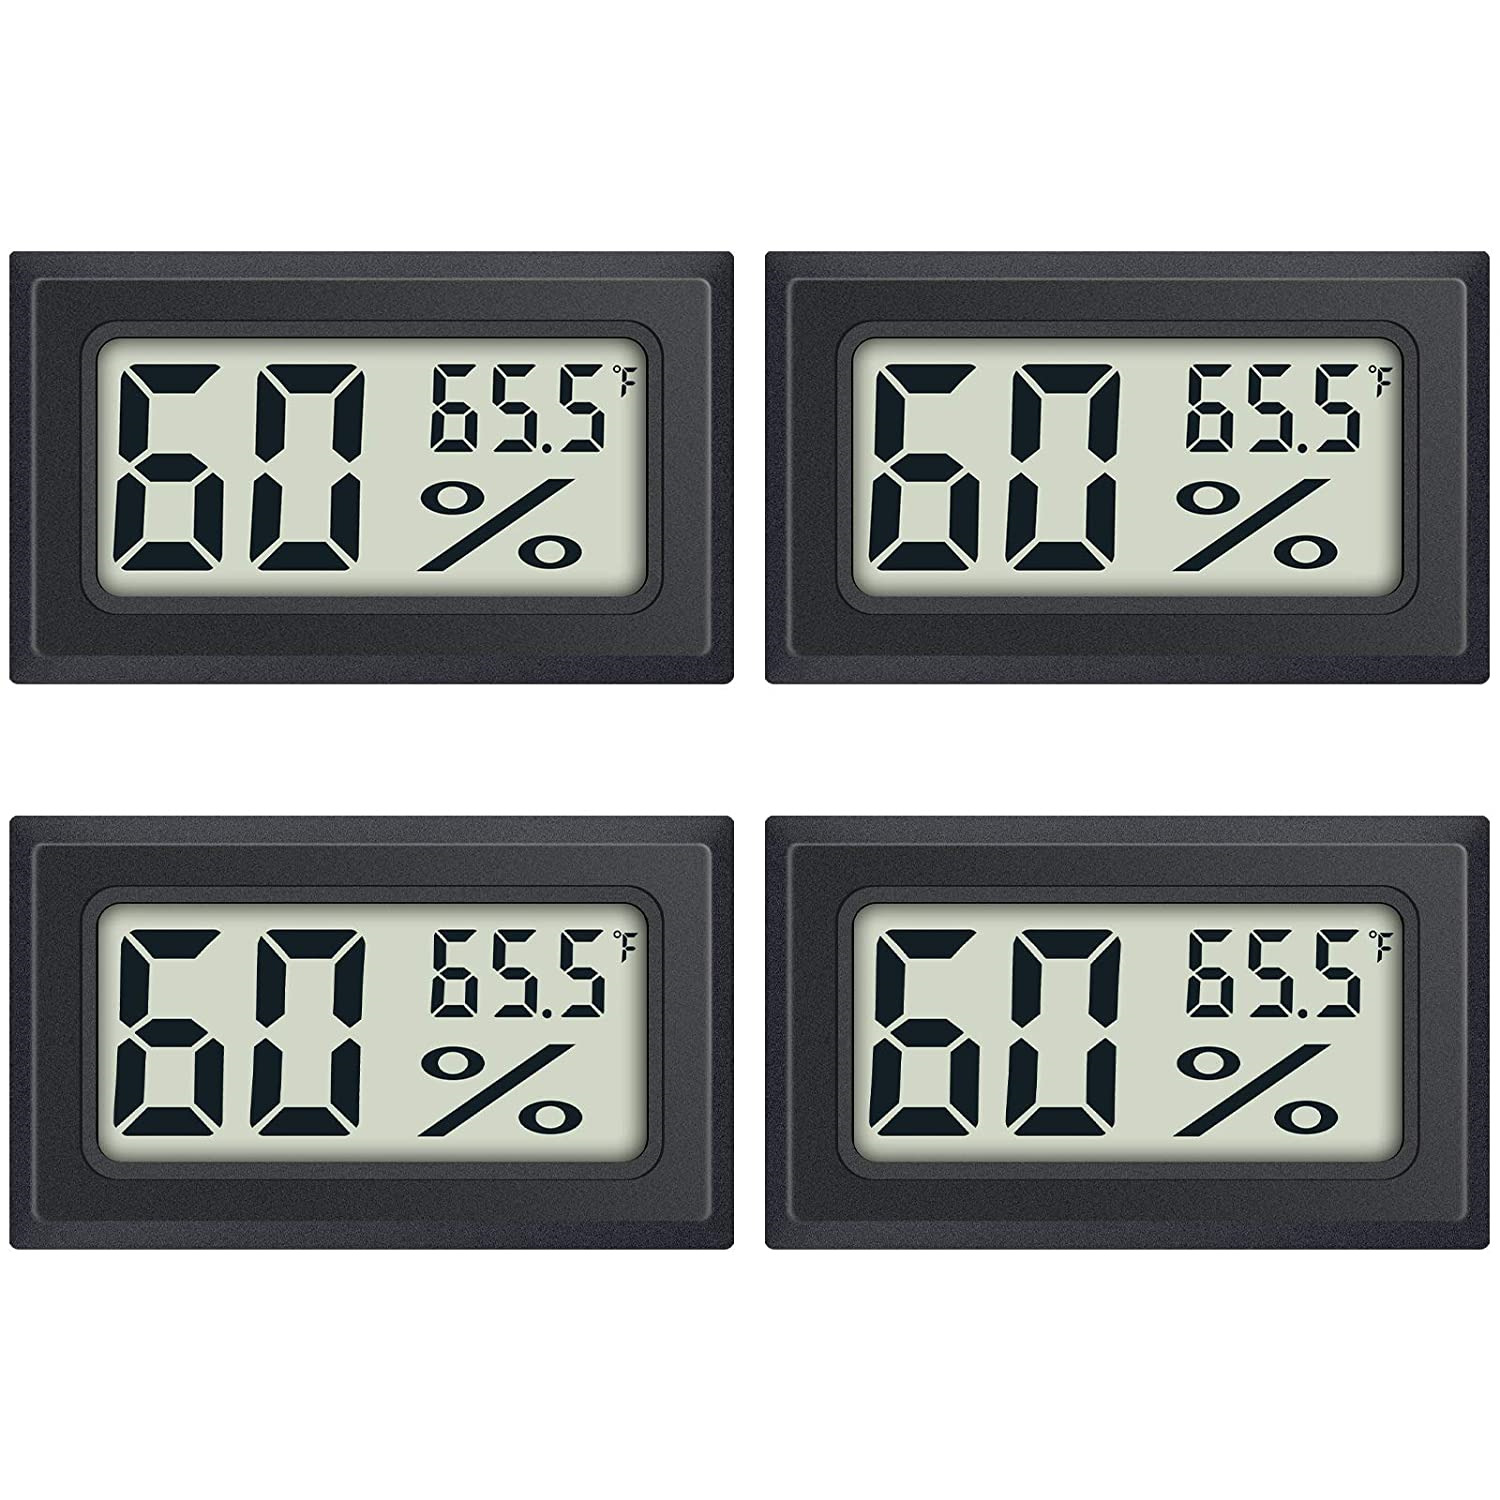 Mini Hygrometer Thermometer LCD Digital Indoor Humidity Gauge Monitor Fahrenheit